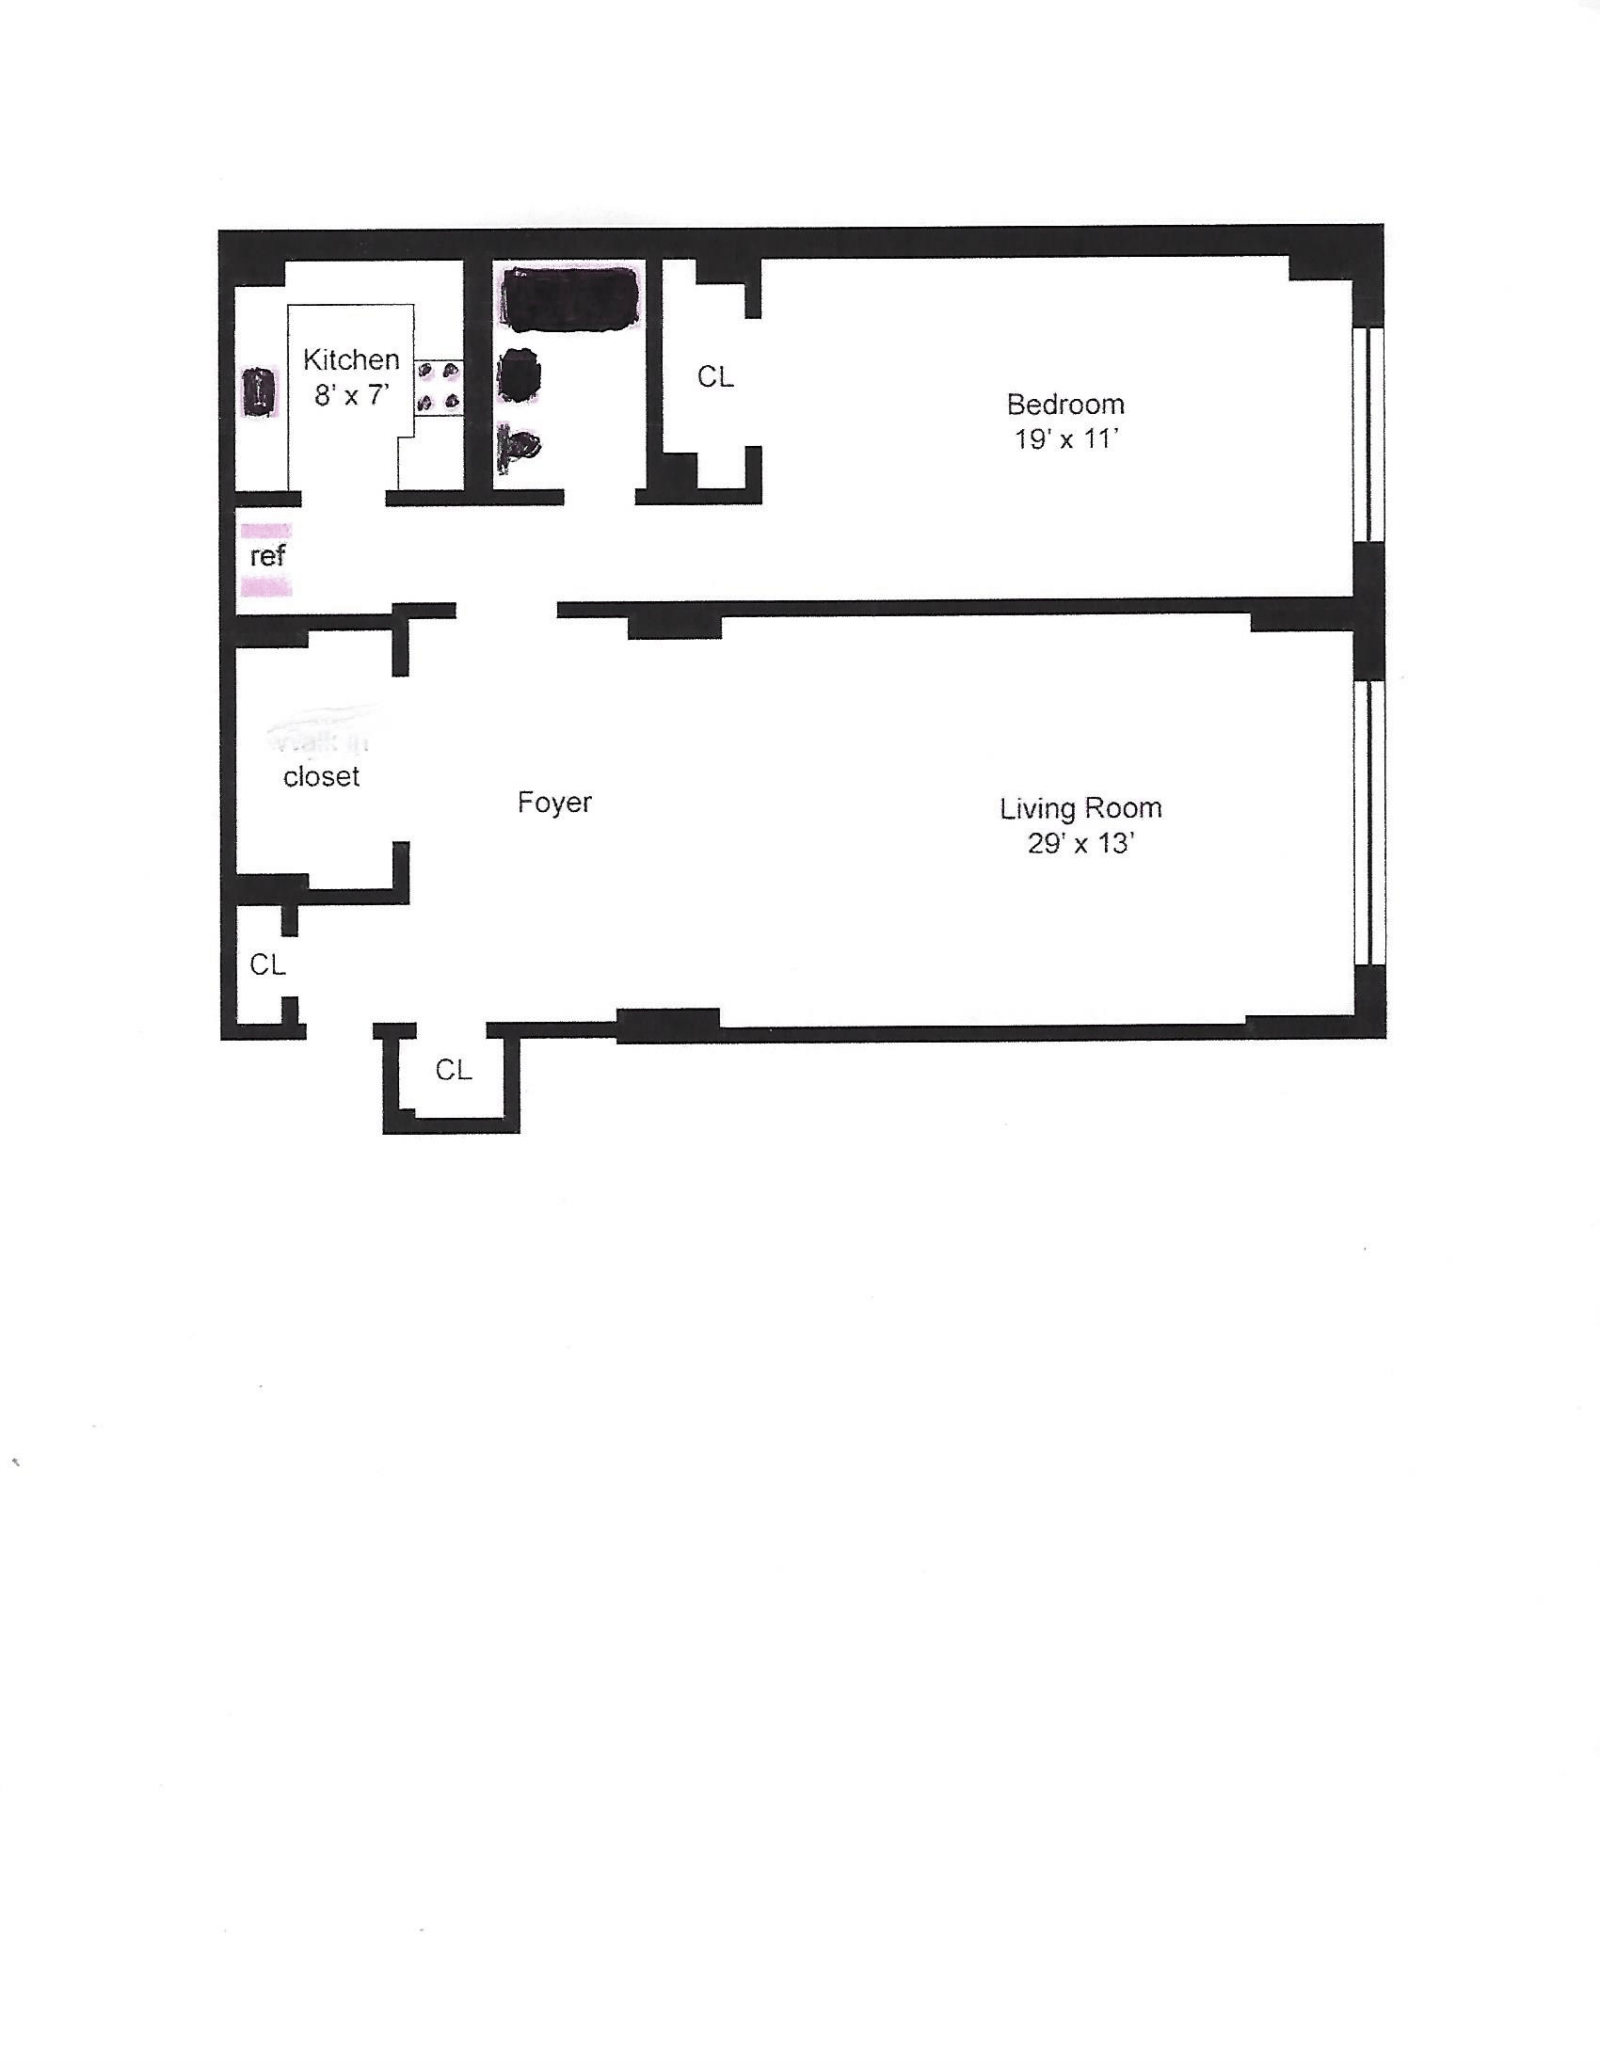 Floorplan for 440 East 62nd Street, 17G